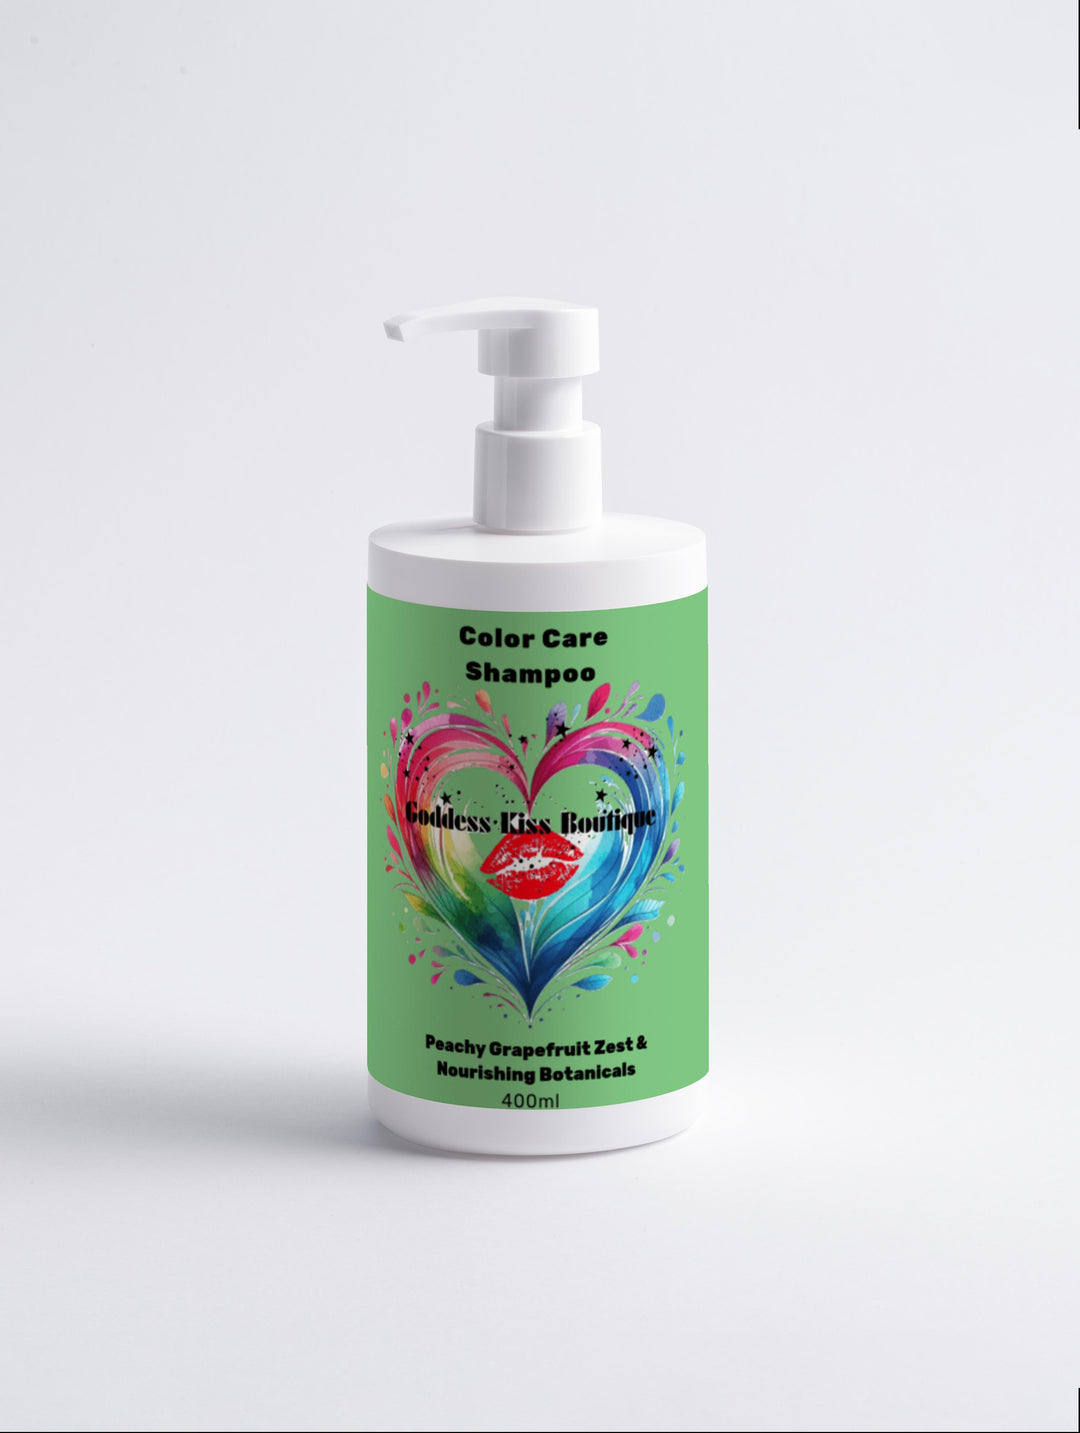 Colour Care Shampoo with Peachy Grapefruit Zest & Nourishing Botanicals